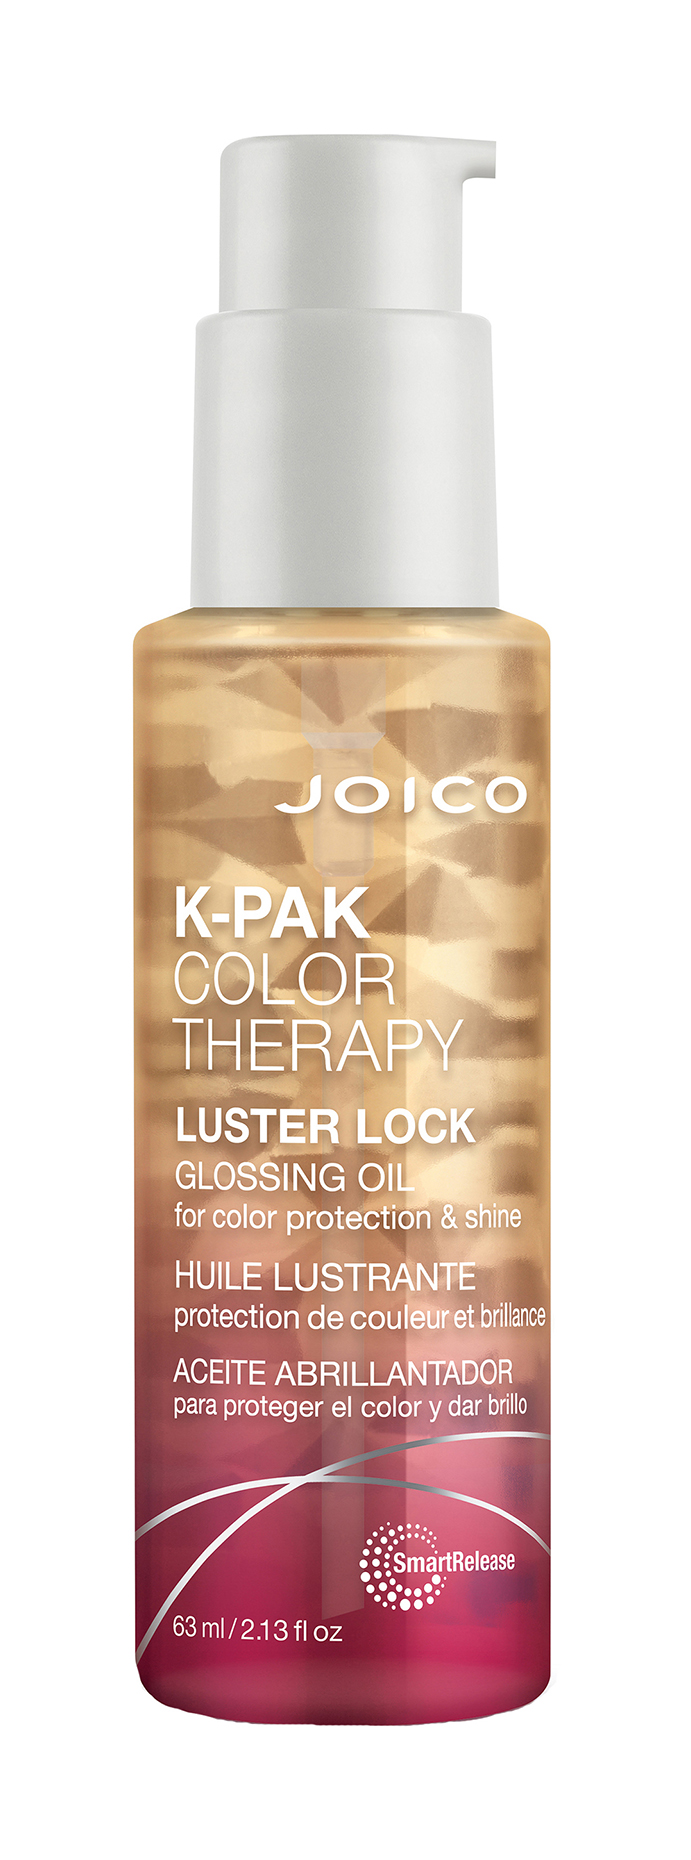 Масло для волос Joico K-Pak Color Therapy Luster Lock Glossing Oil для защиты цвета, 63 мл спрей для волос kaaral style perfetto bling glossing spray защита от курчавости 300 мл